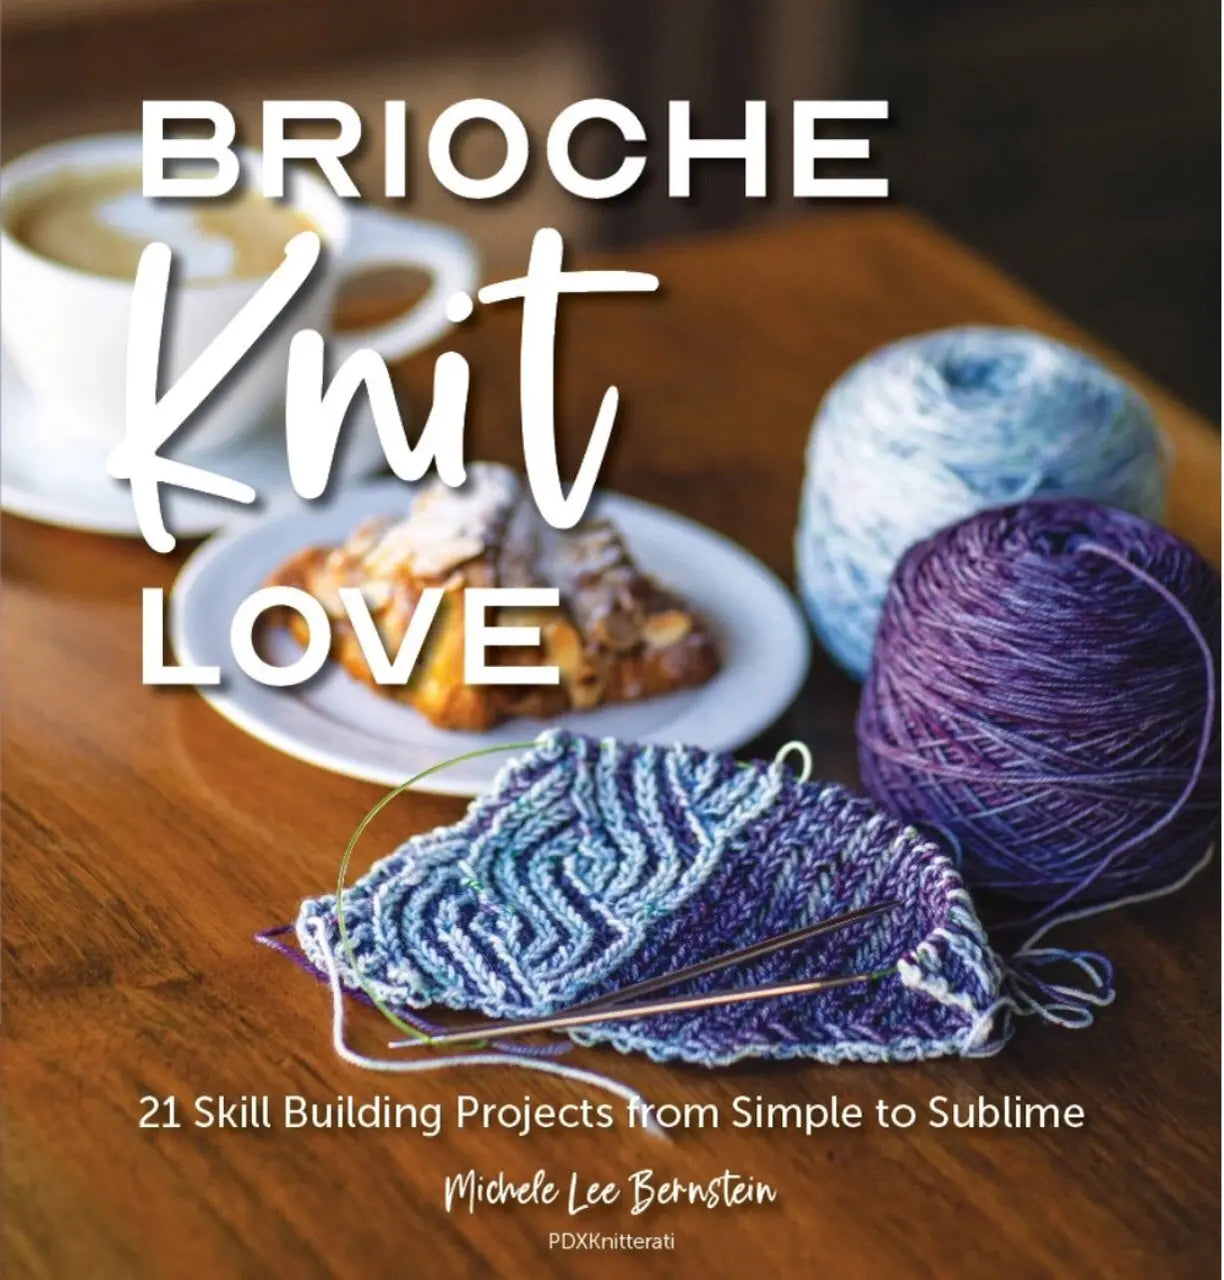 Brioche Knit Love Yarn Folk